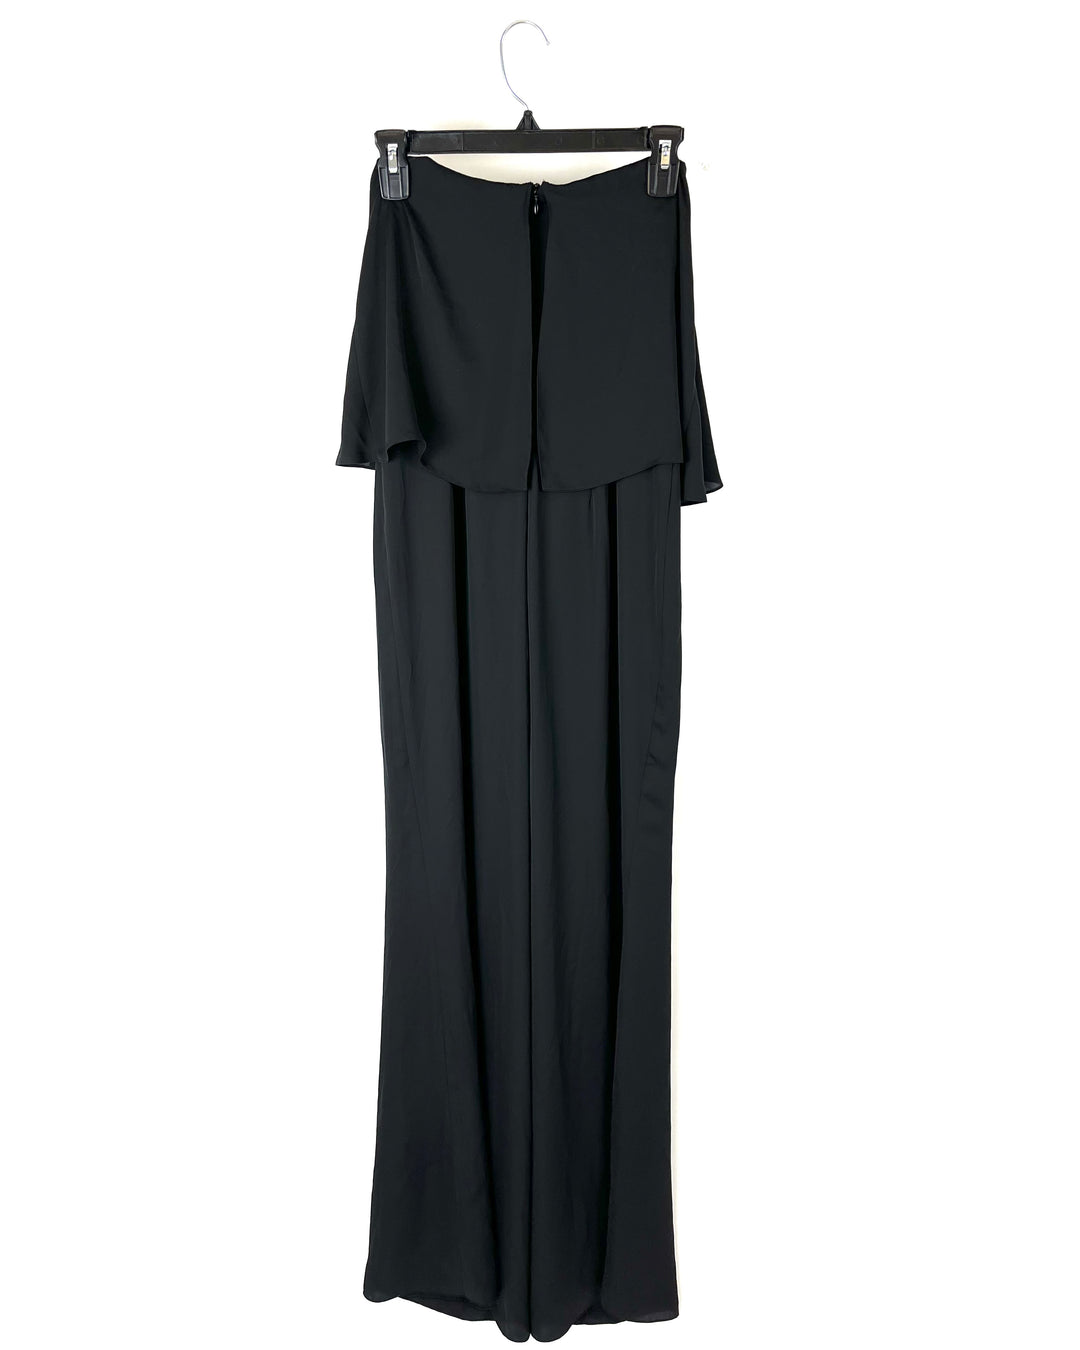 Black Sleeveless Maxi Dress - Size 4-6